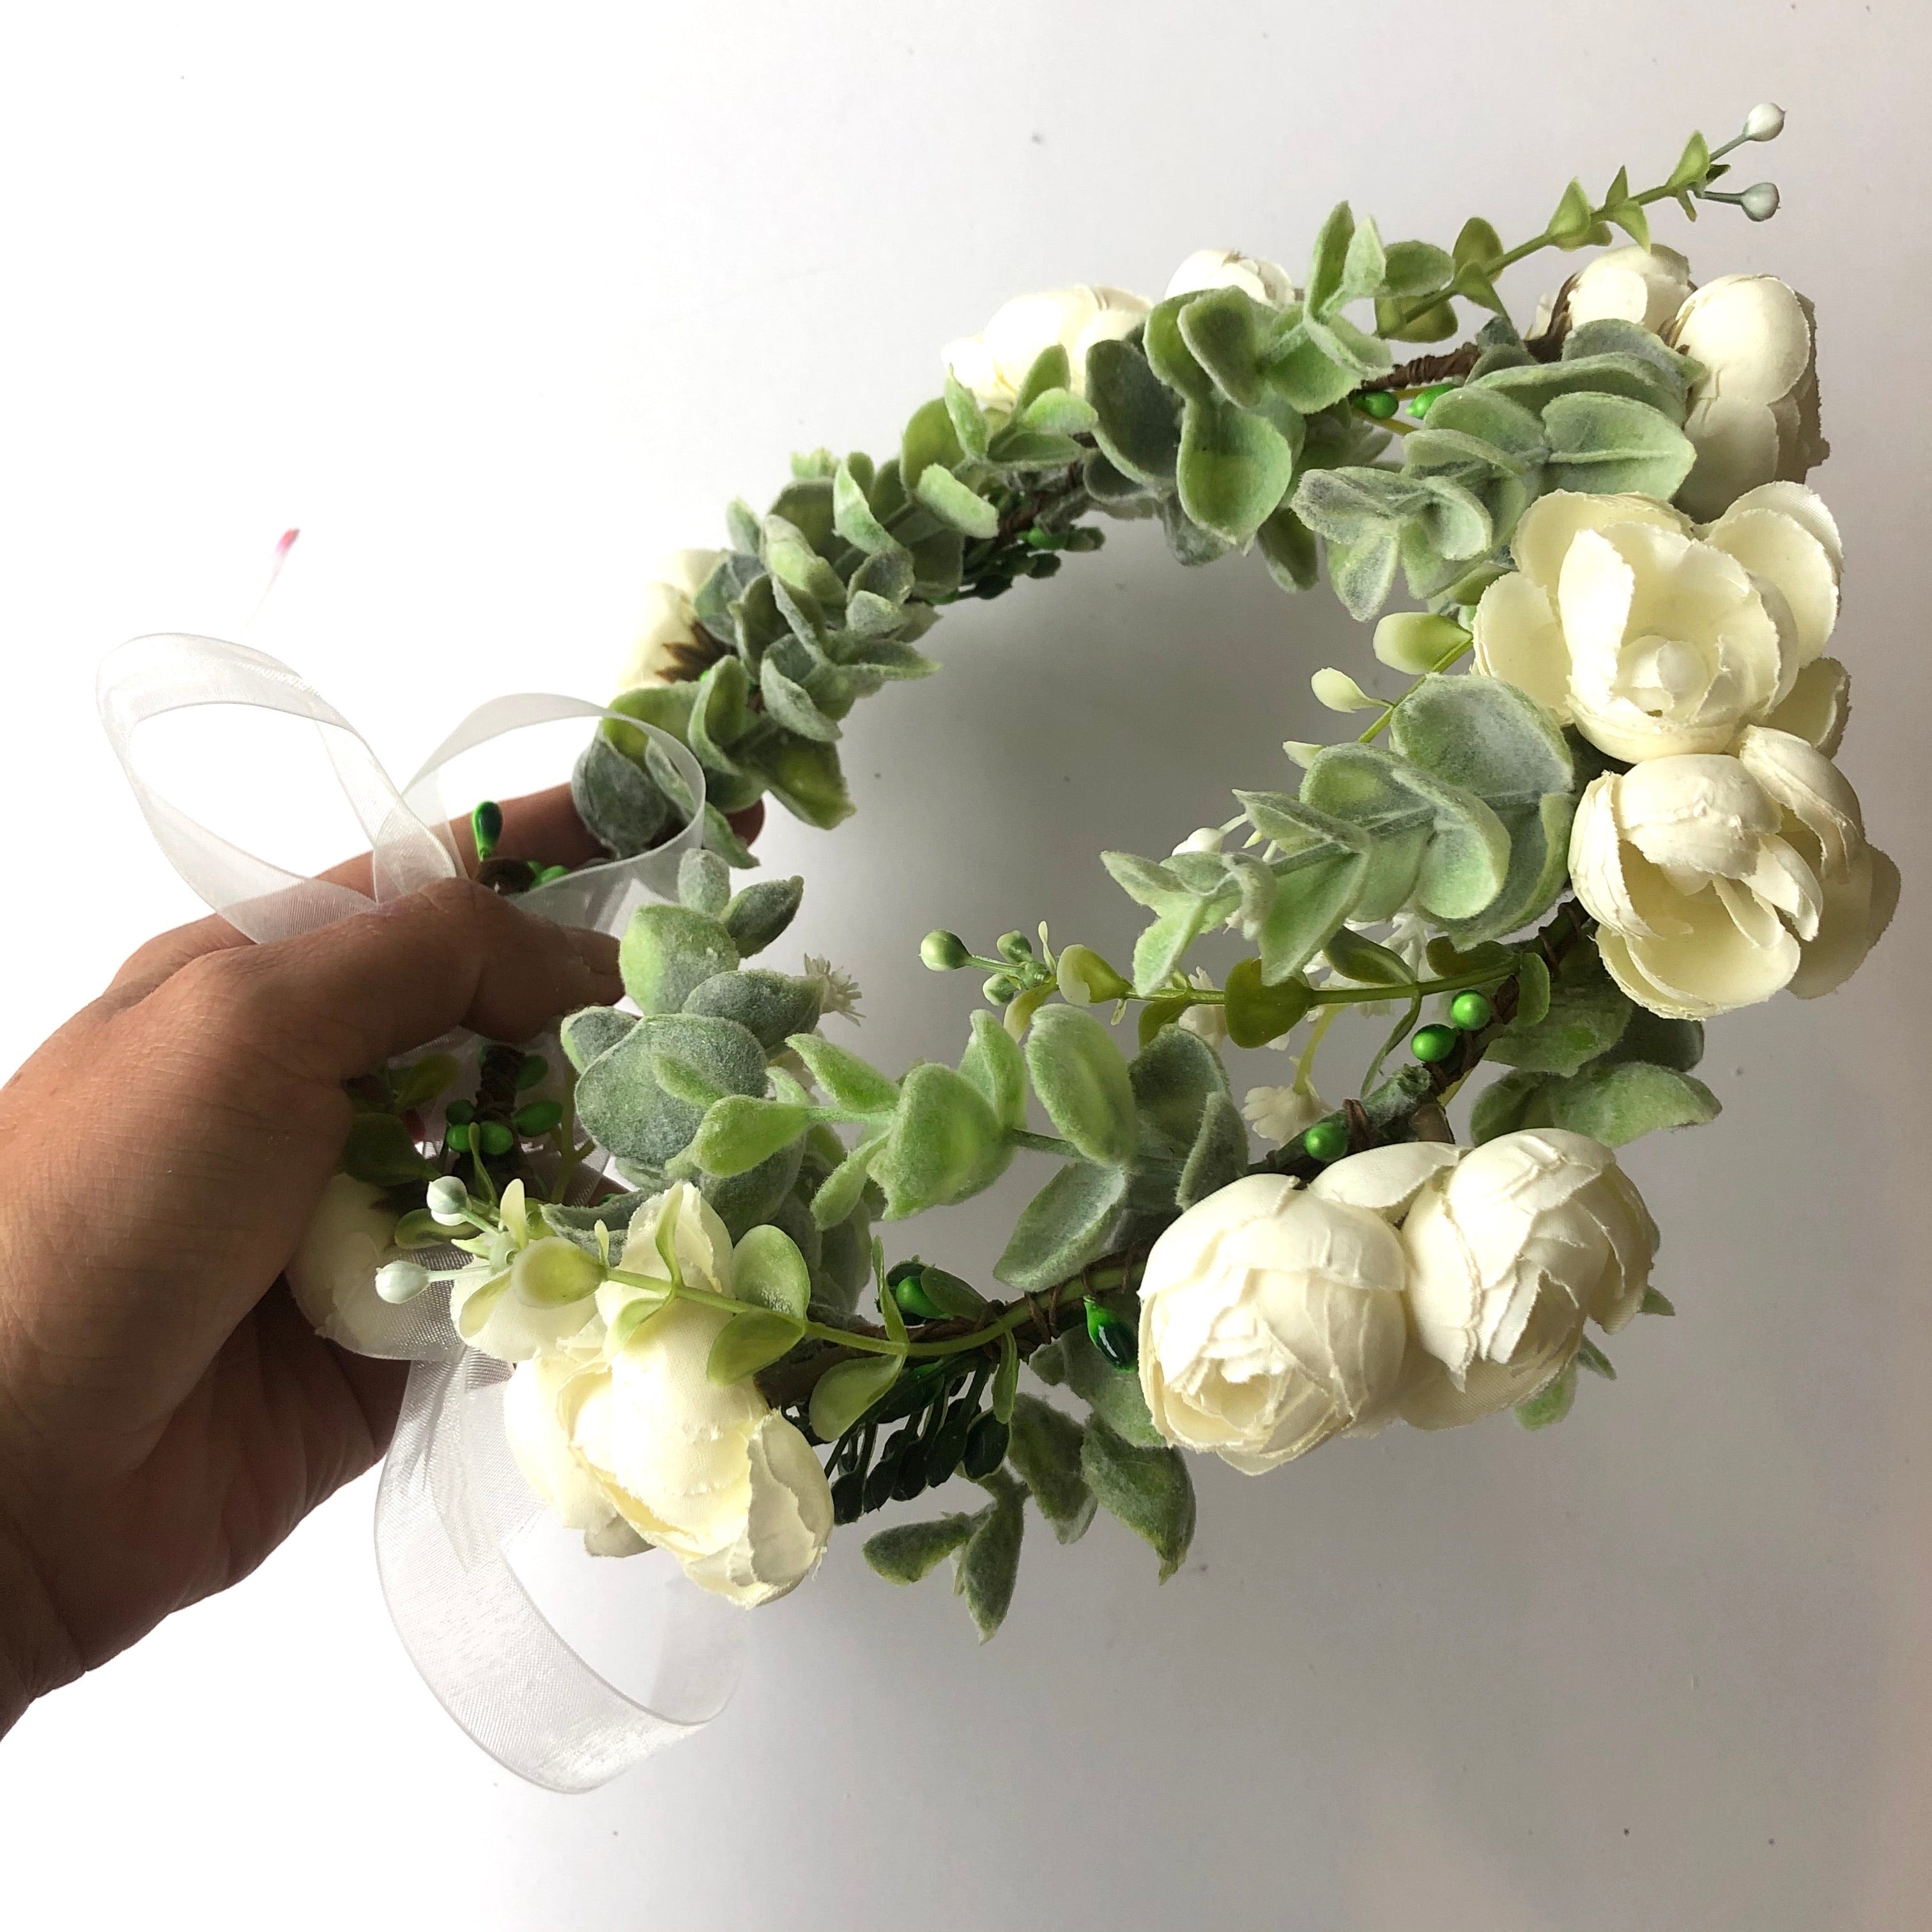 Flower Girl / Holy Communion Floral Flower Crown - White